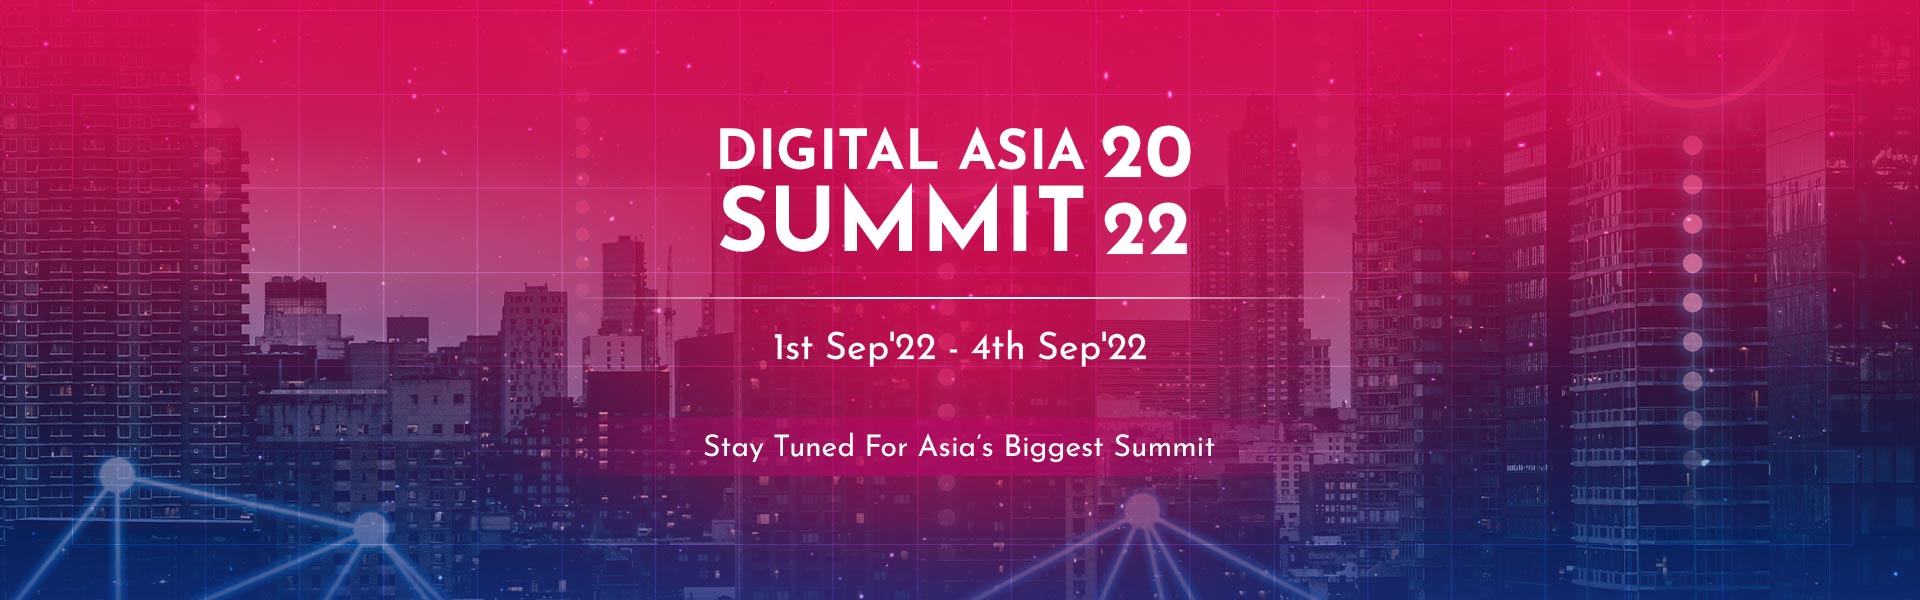 1920x600 web banner 1 - Digital Asia Community